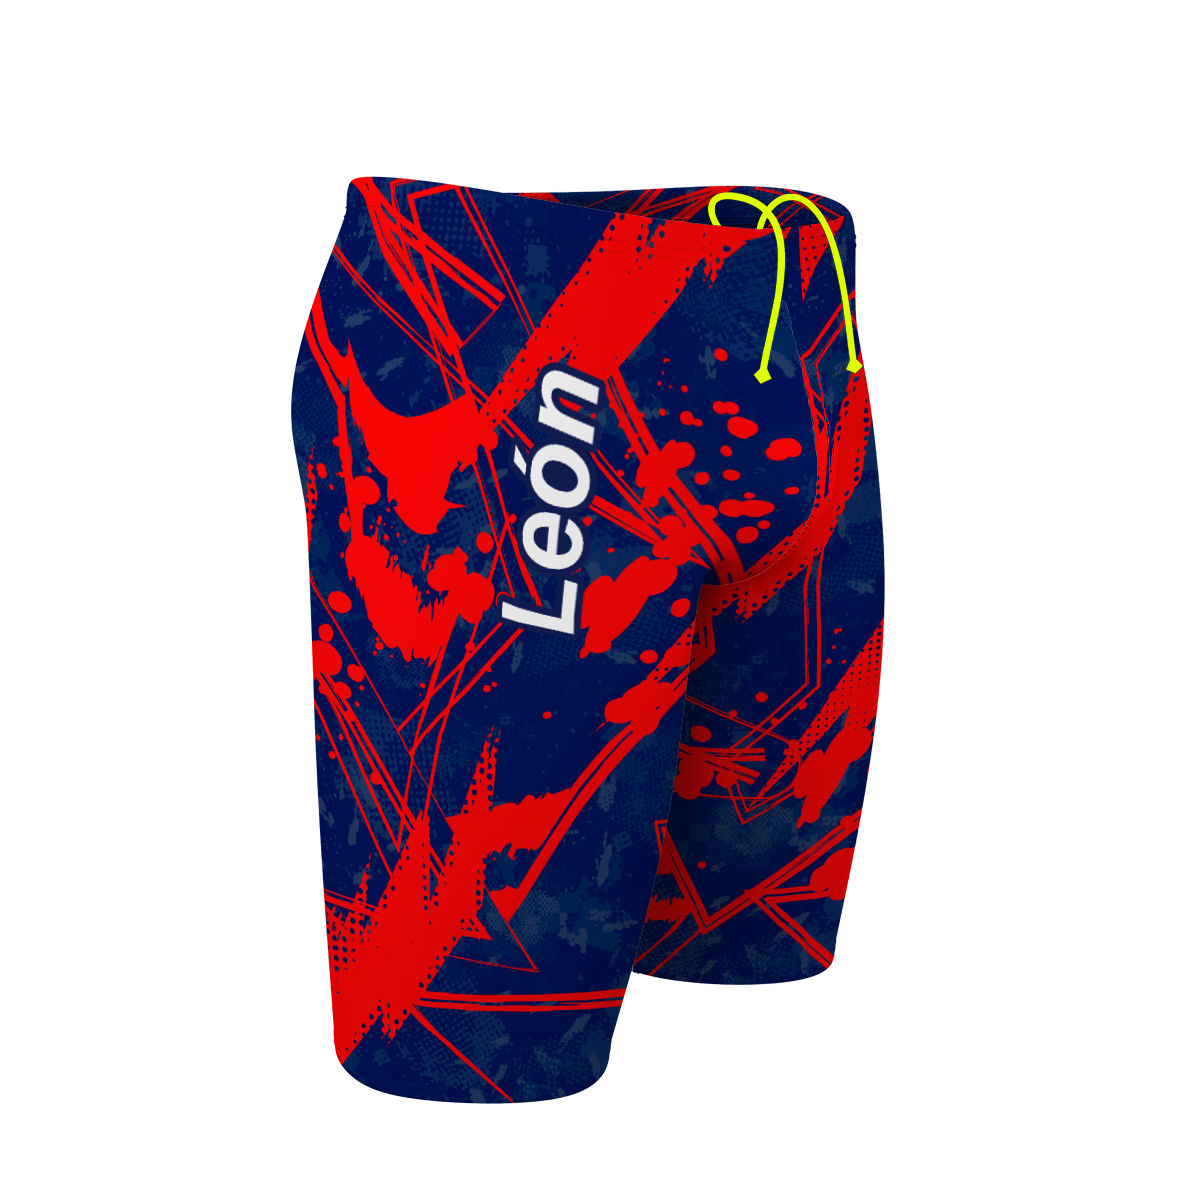 NV León - Jammer Swimsuit